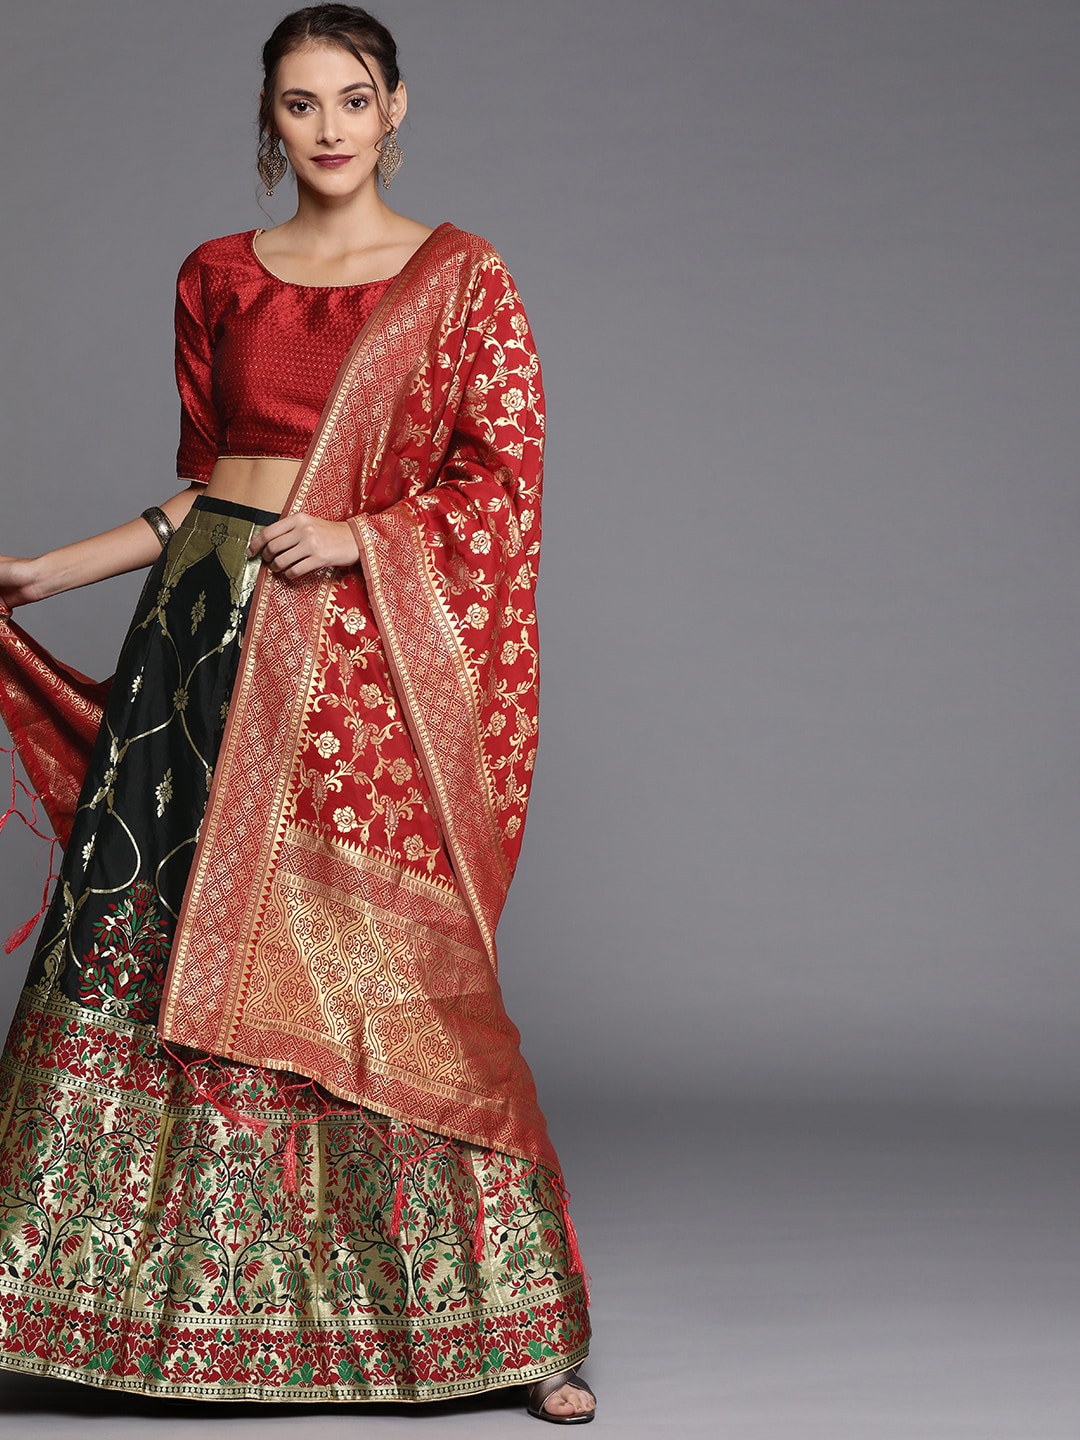 Mitera Black & Red Woven Design Semi-Stitched Lehenga & Unstitched Blouse with Dupatta Price in India